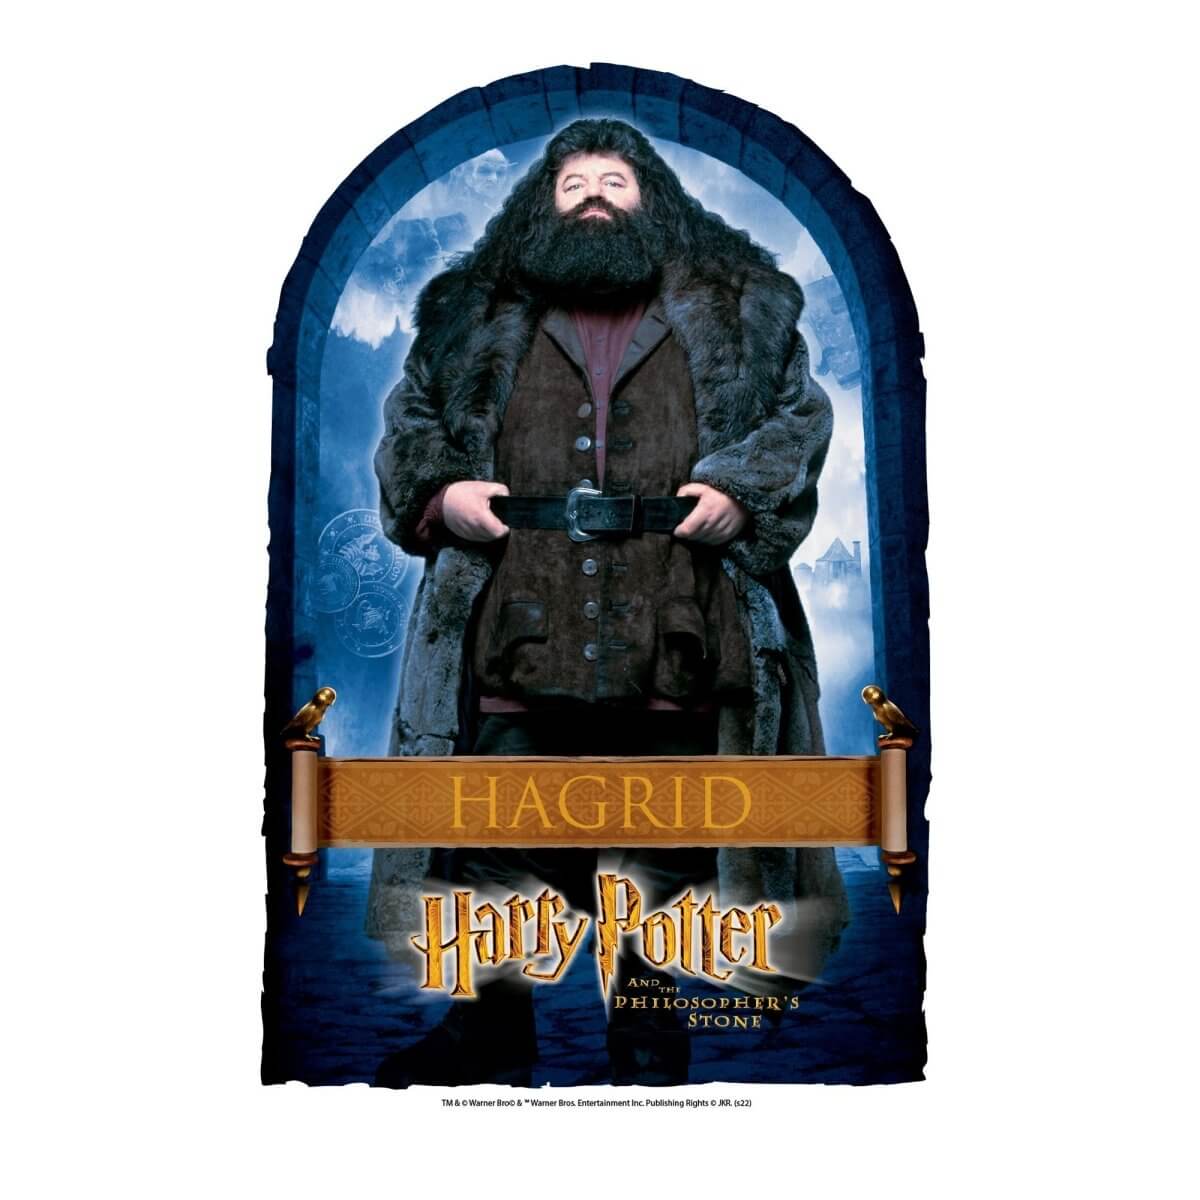 Kismet Decals Harry Potter Hagrid Poster Licensed Wall Sticker - Easy DIY Home & Kids Room Decor Wall Decal Art - Kismet Decals